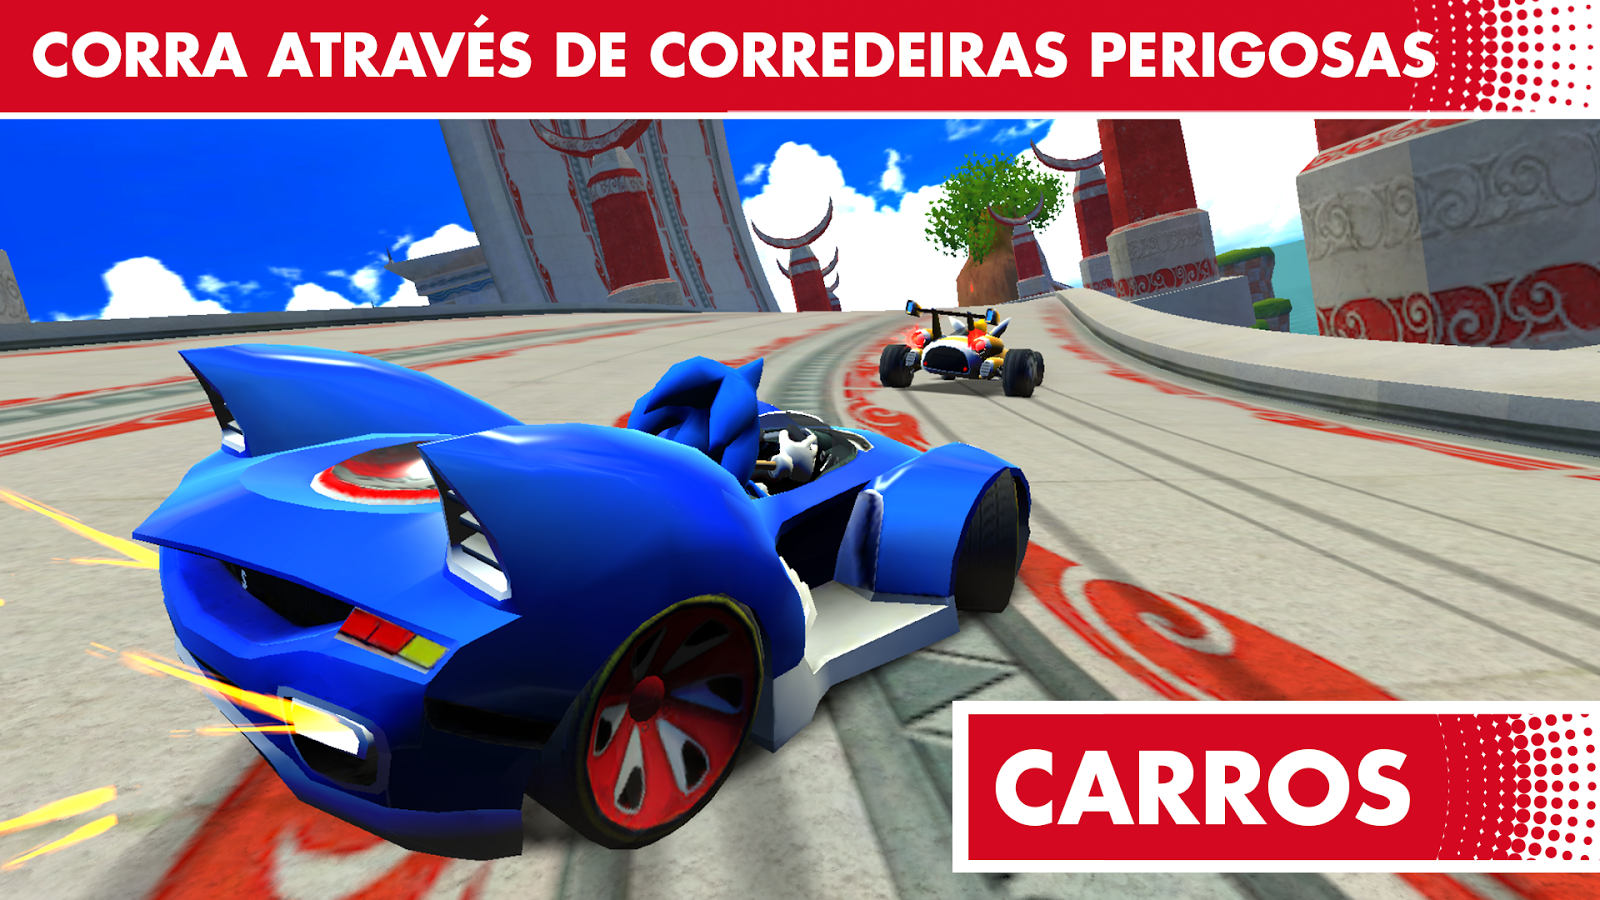   Sonic Racing Transformed: captura de tela 